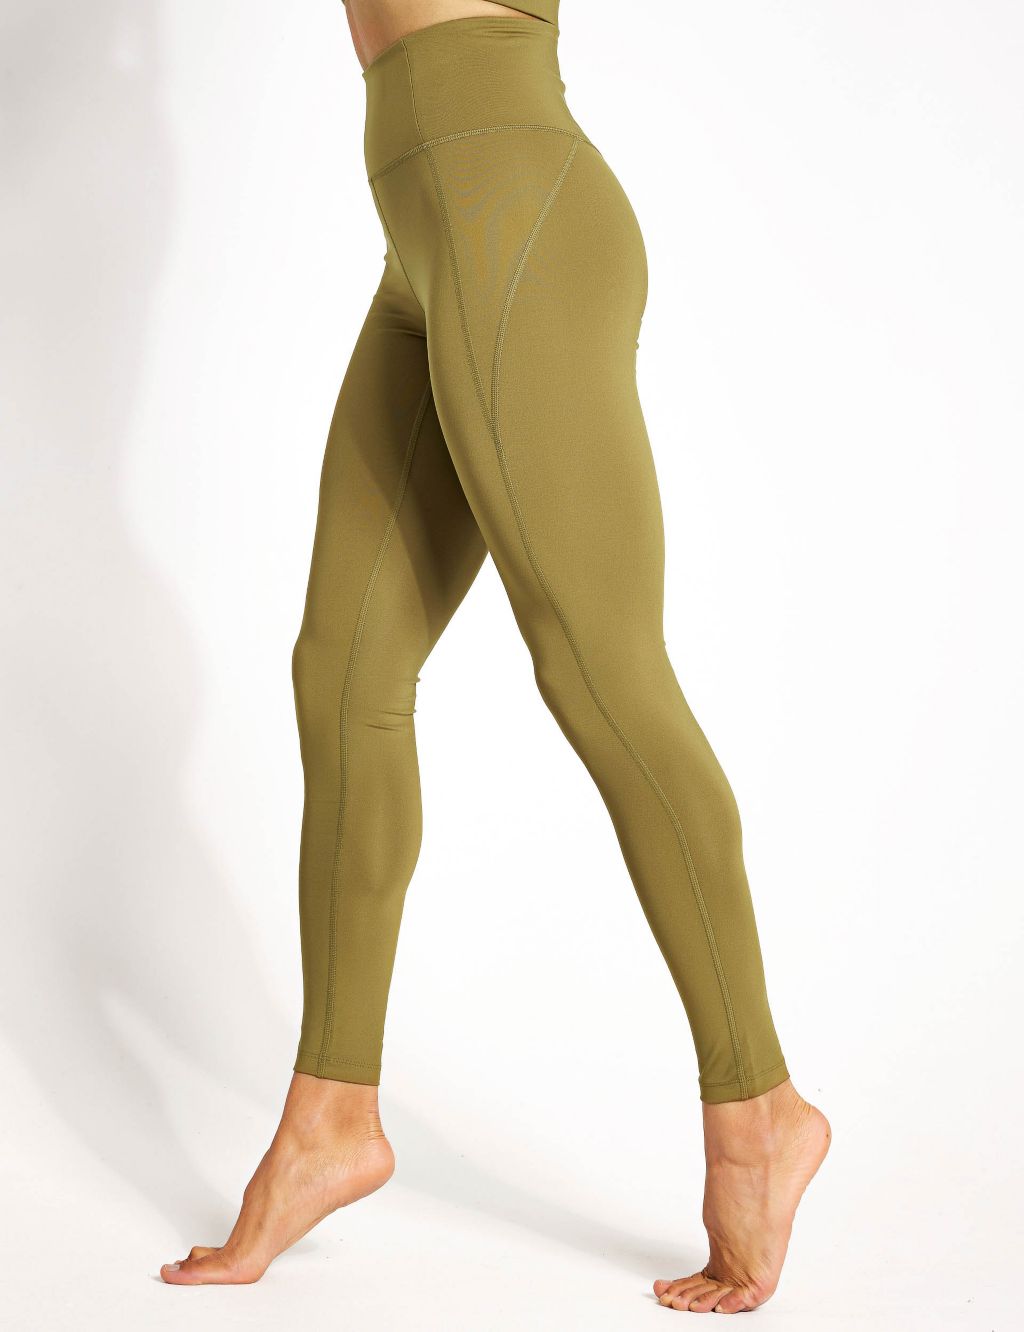 Combo Pack Of 2 Skinny Fit 3/4 Capris Leggings For Women Merin Green Khaki  at Rs 977.00, Women Short Leggings